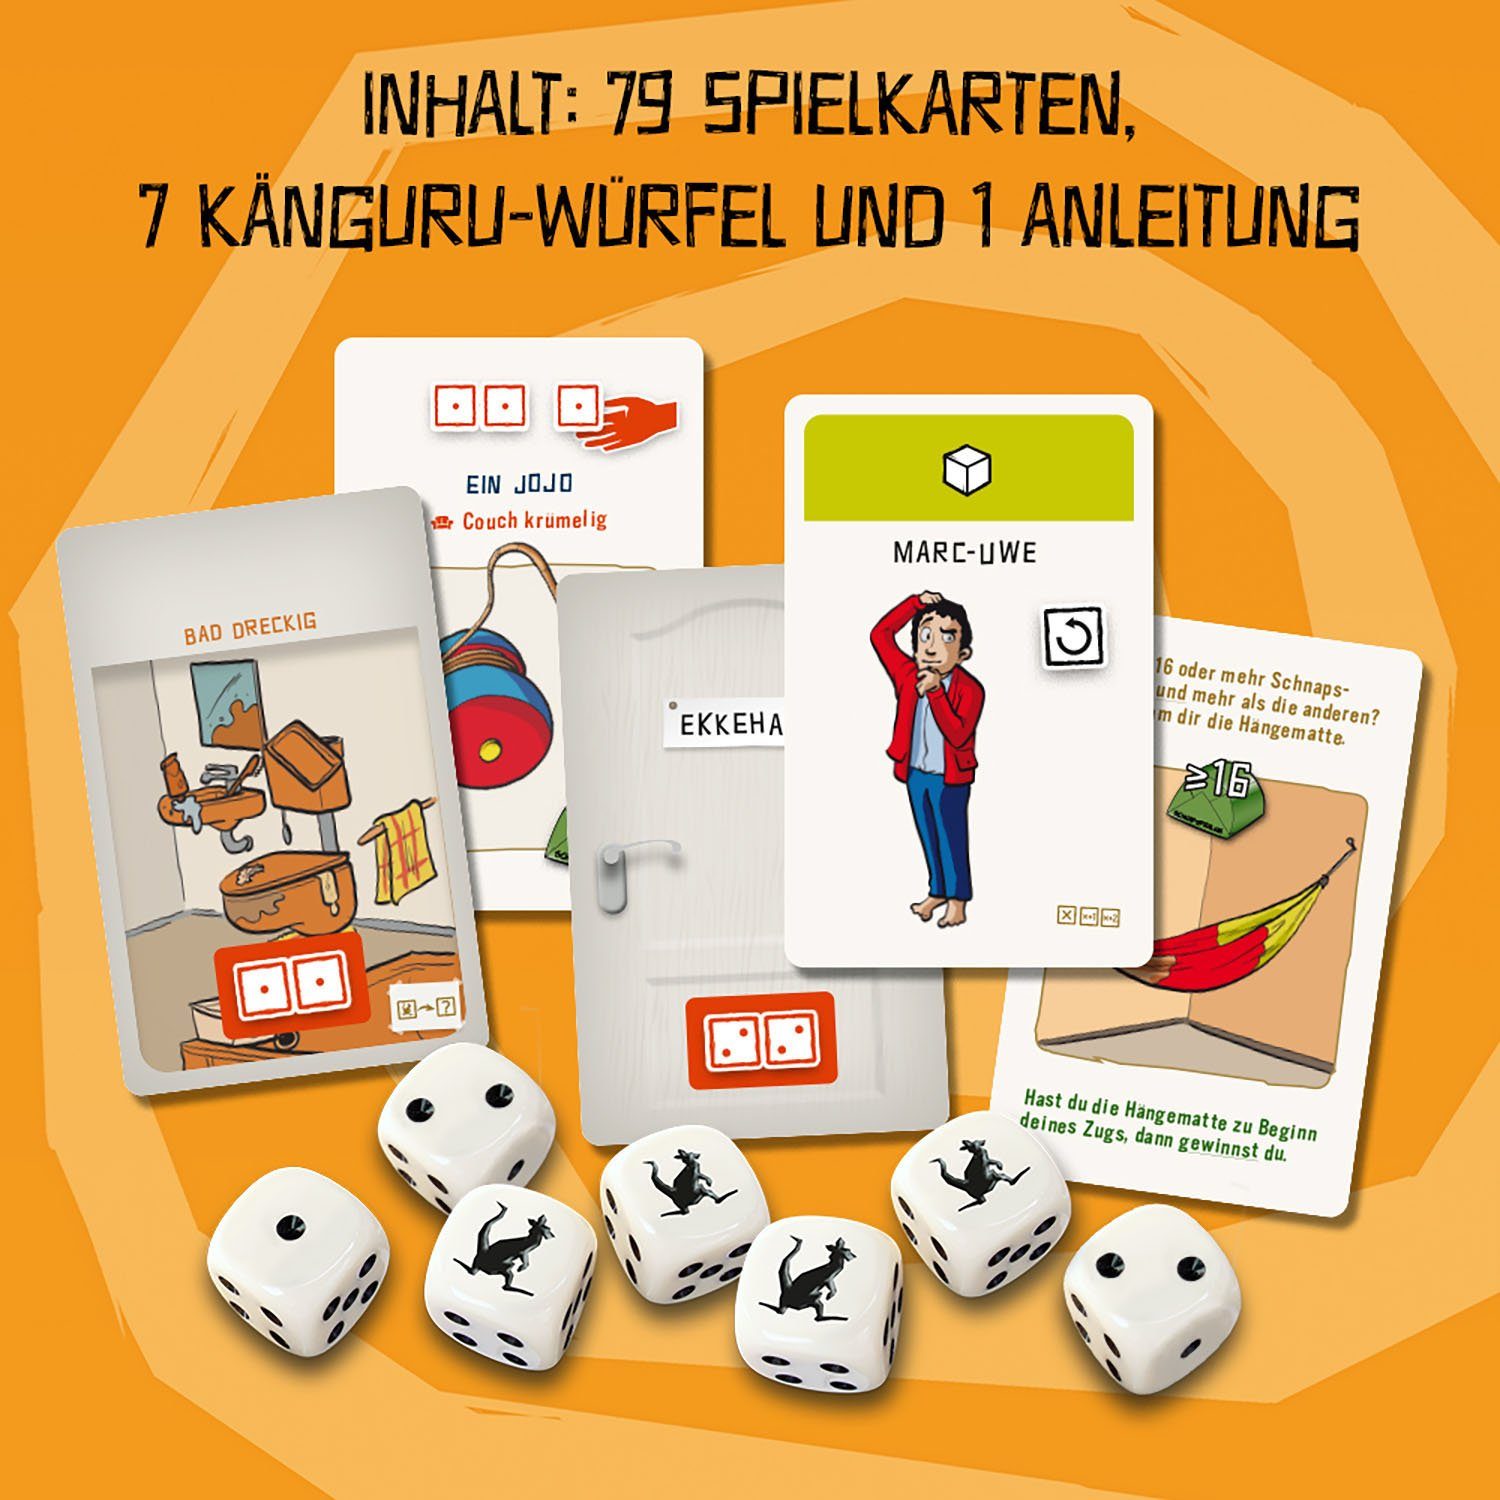 Würfelspiel Spiel, in Kosmos Germany Würfel-WG, Made